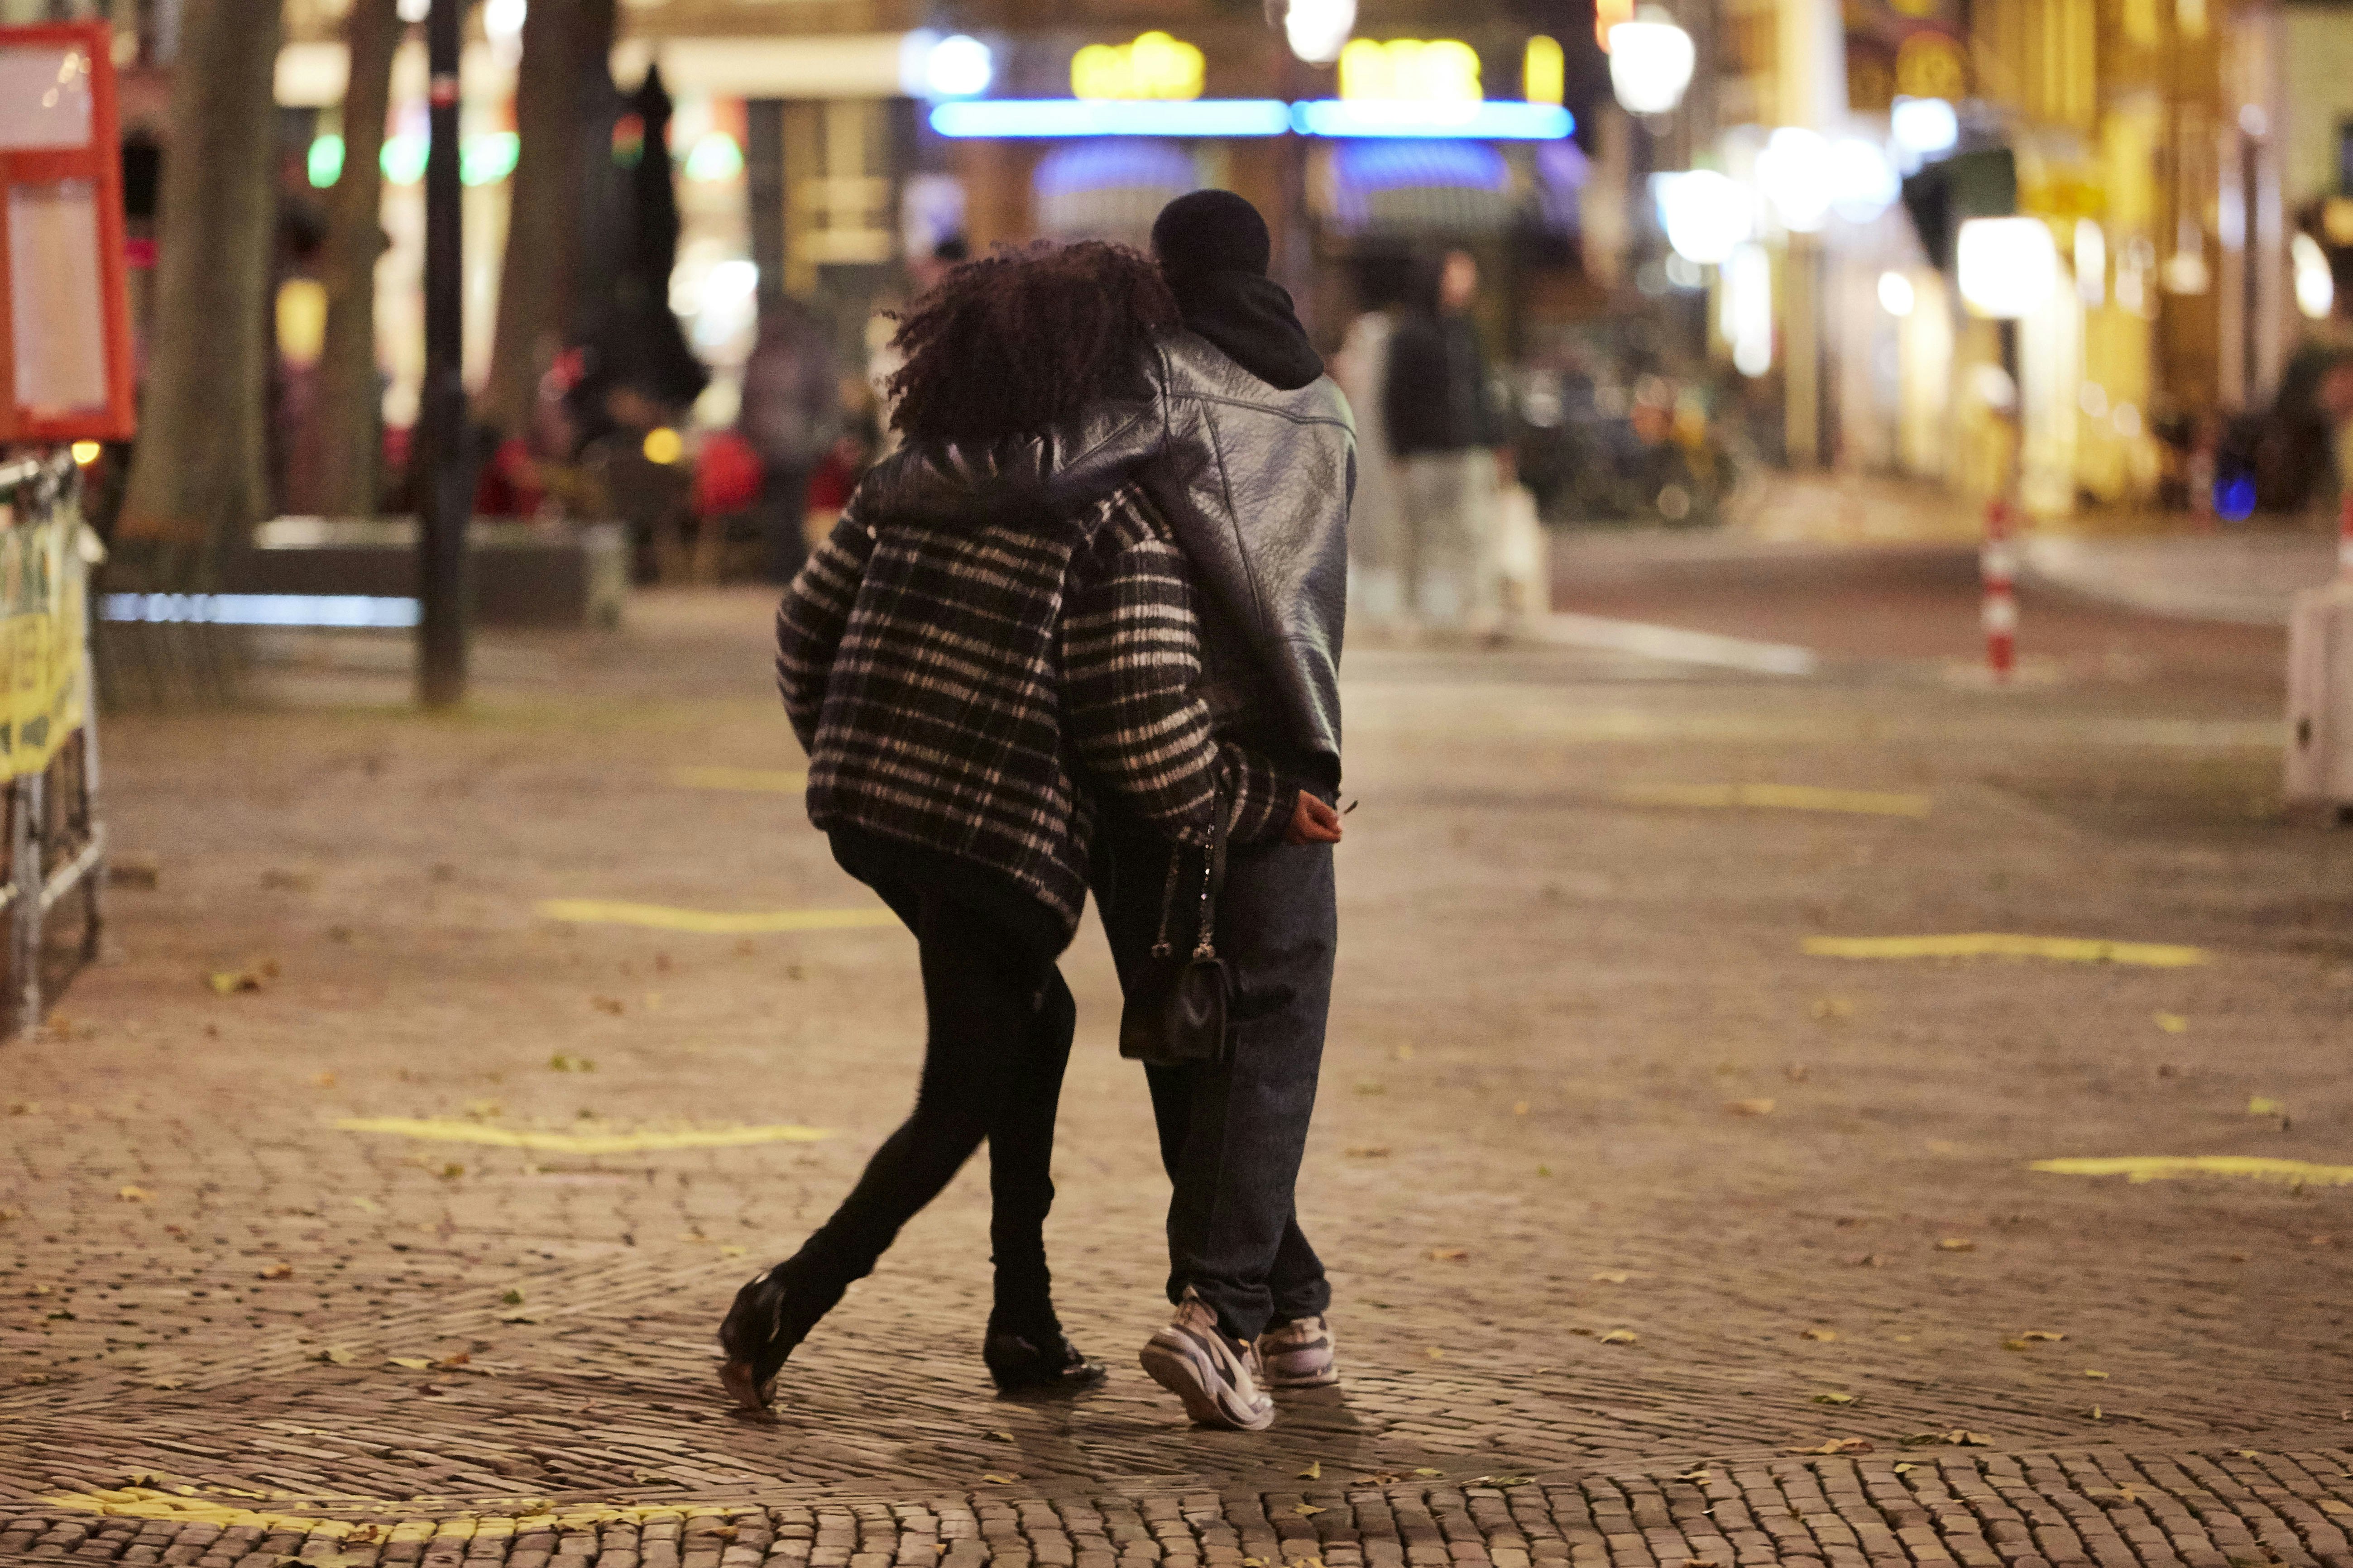  A couple walks out of a café on Rembrandtplein